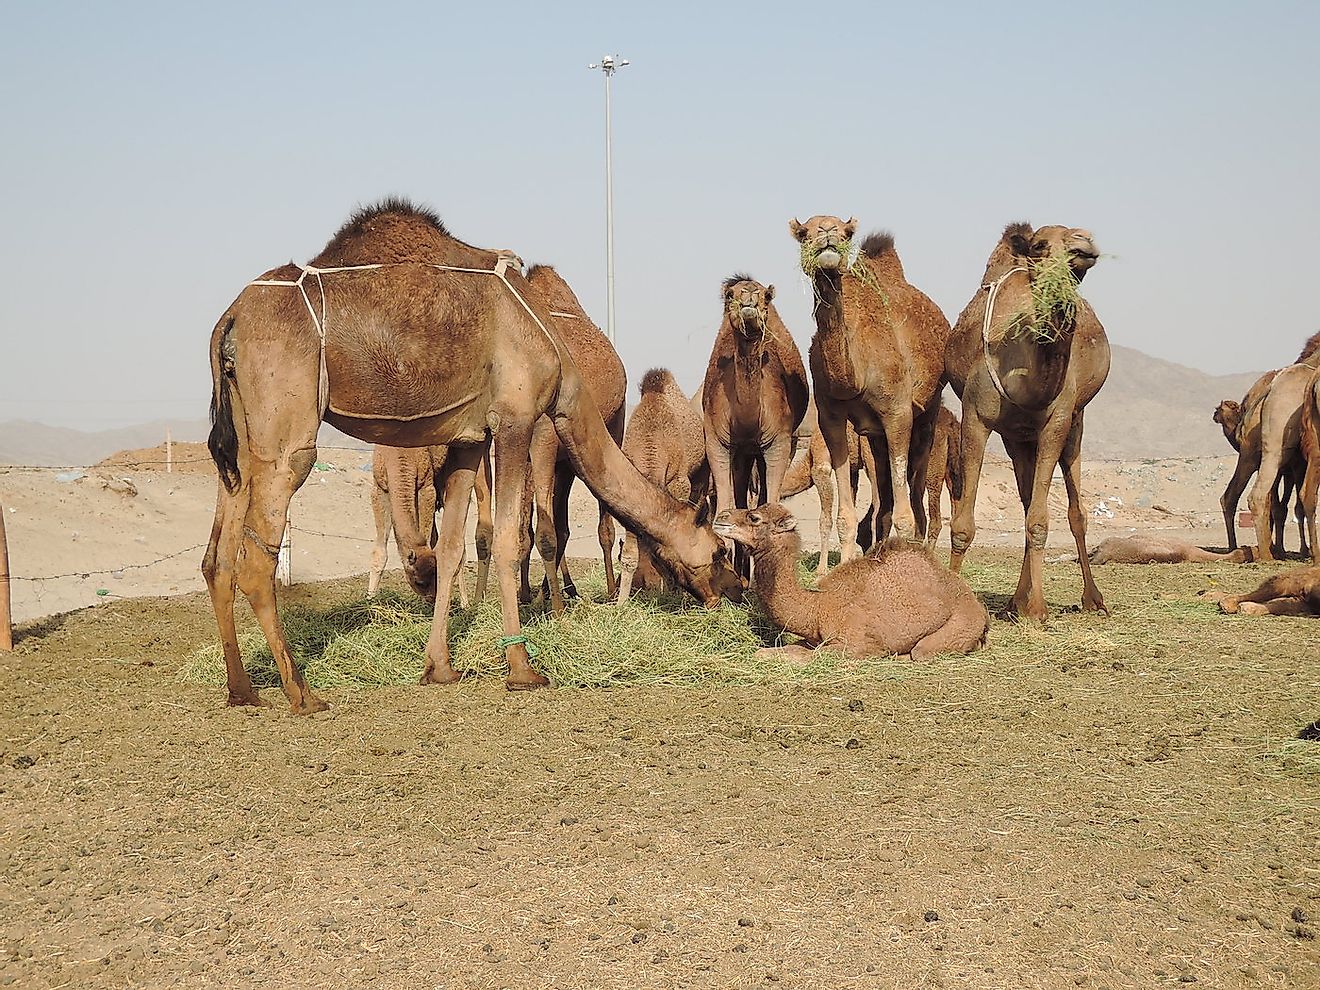 Camel Farm Mecca Arab. Image credit: Burhanuddin/Shutterstock.com